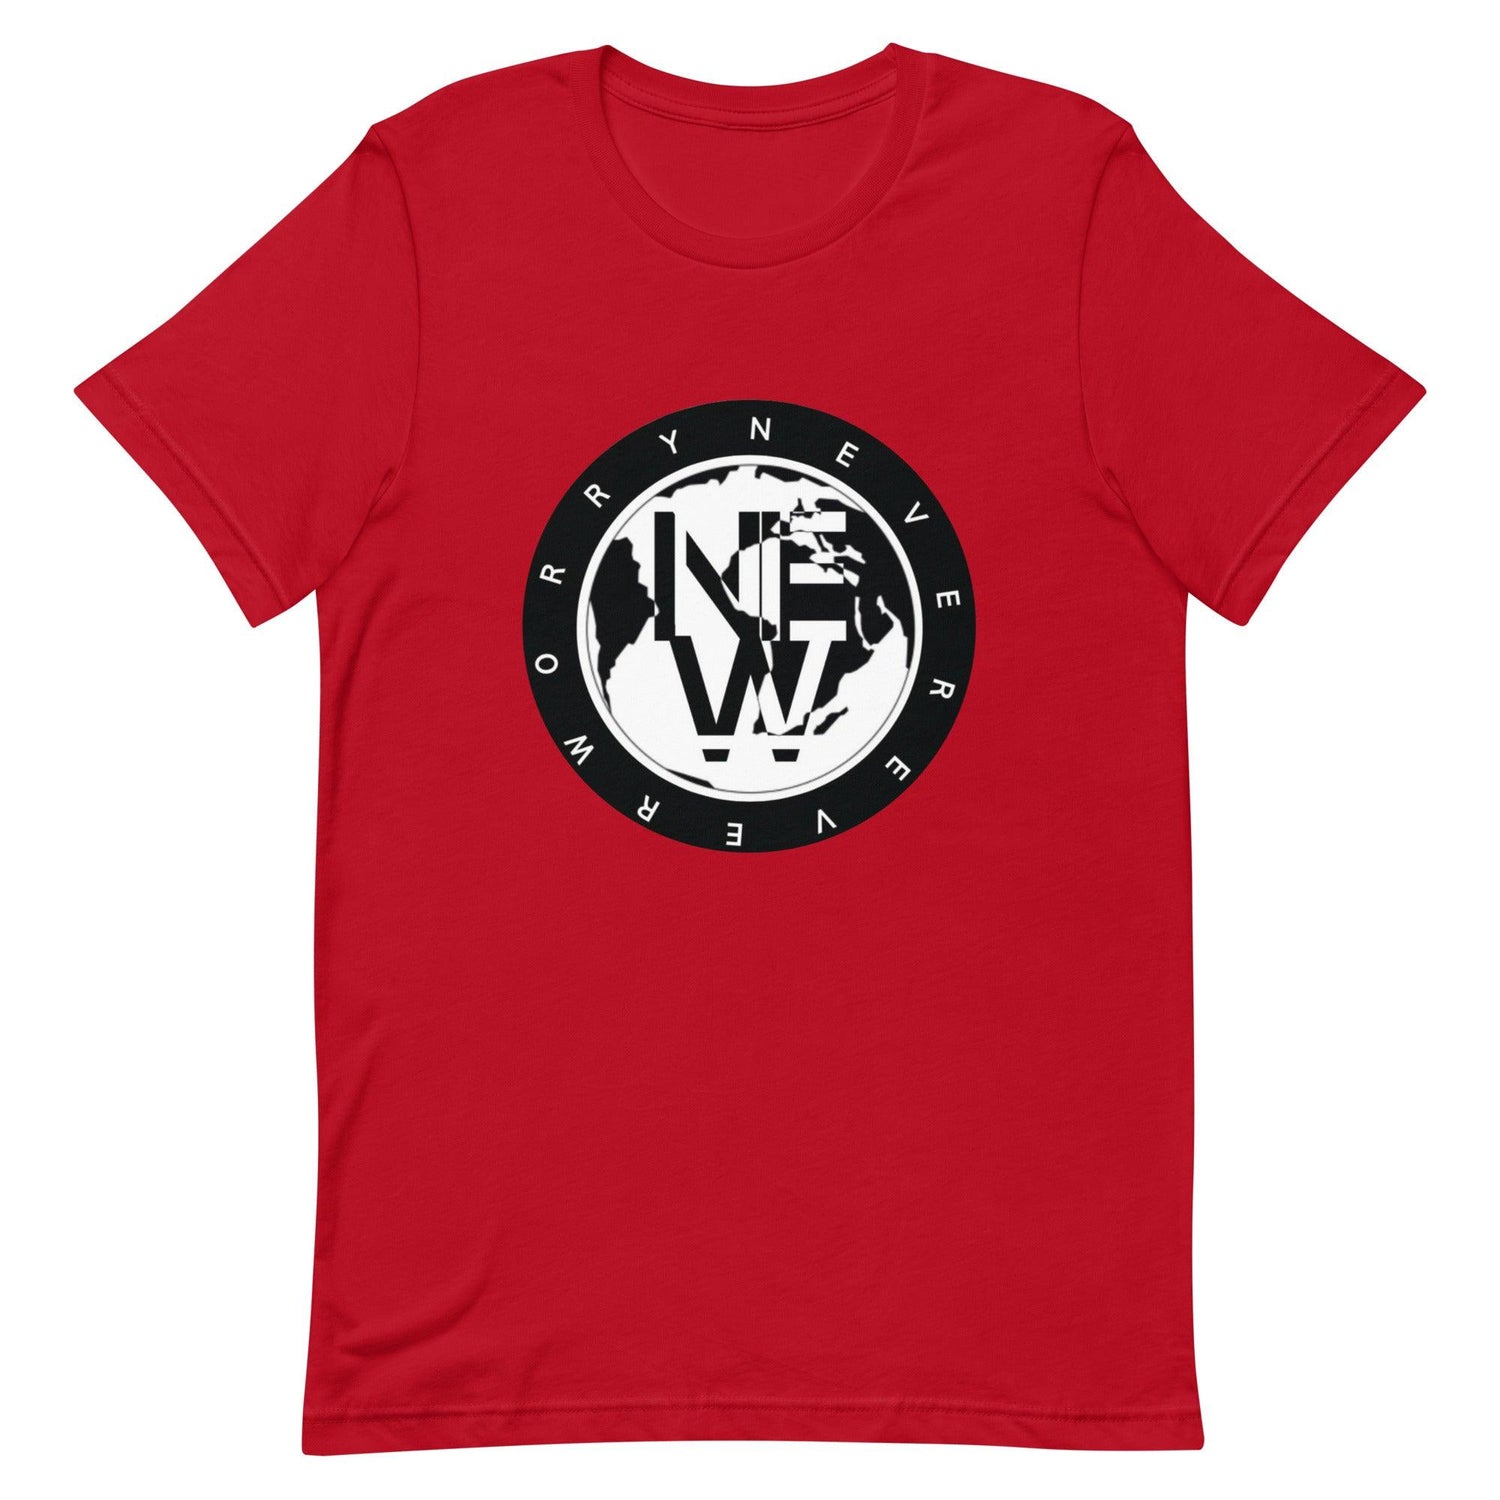 Jonathan Newsome "Never Worry" t-shirt - Fan Arch